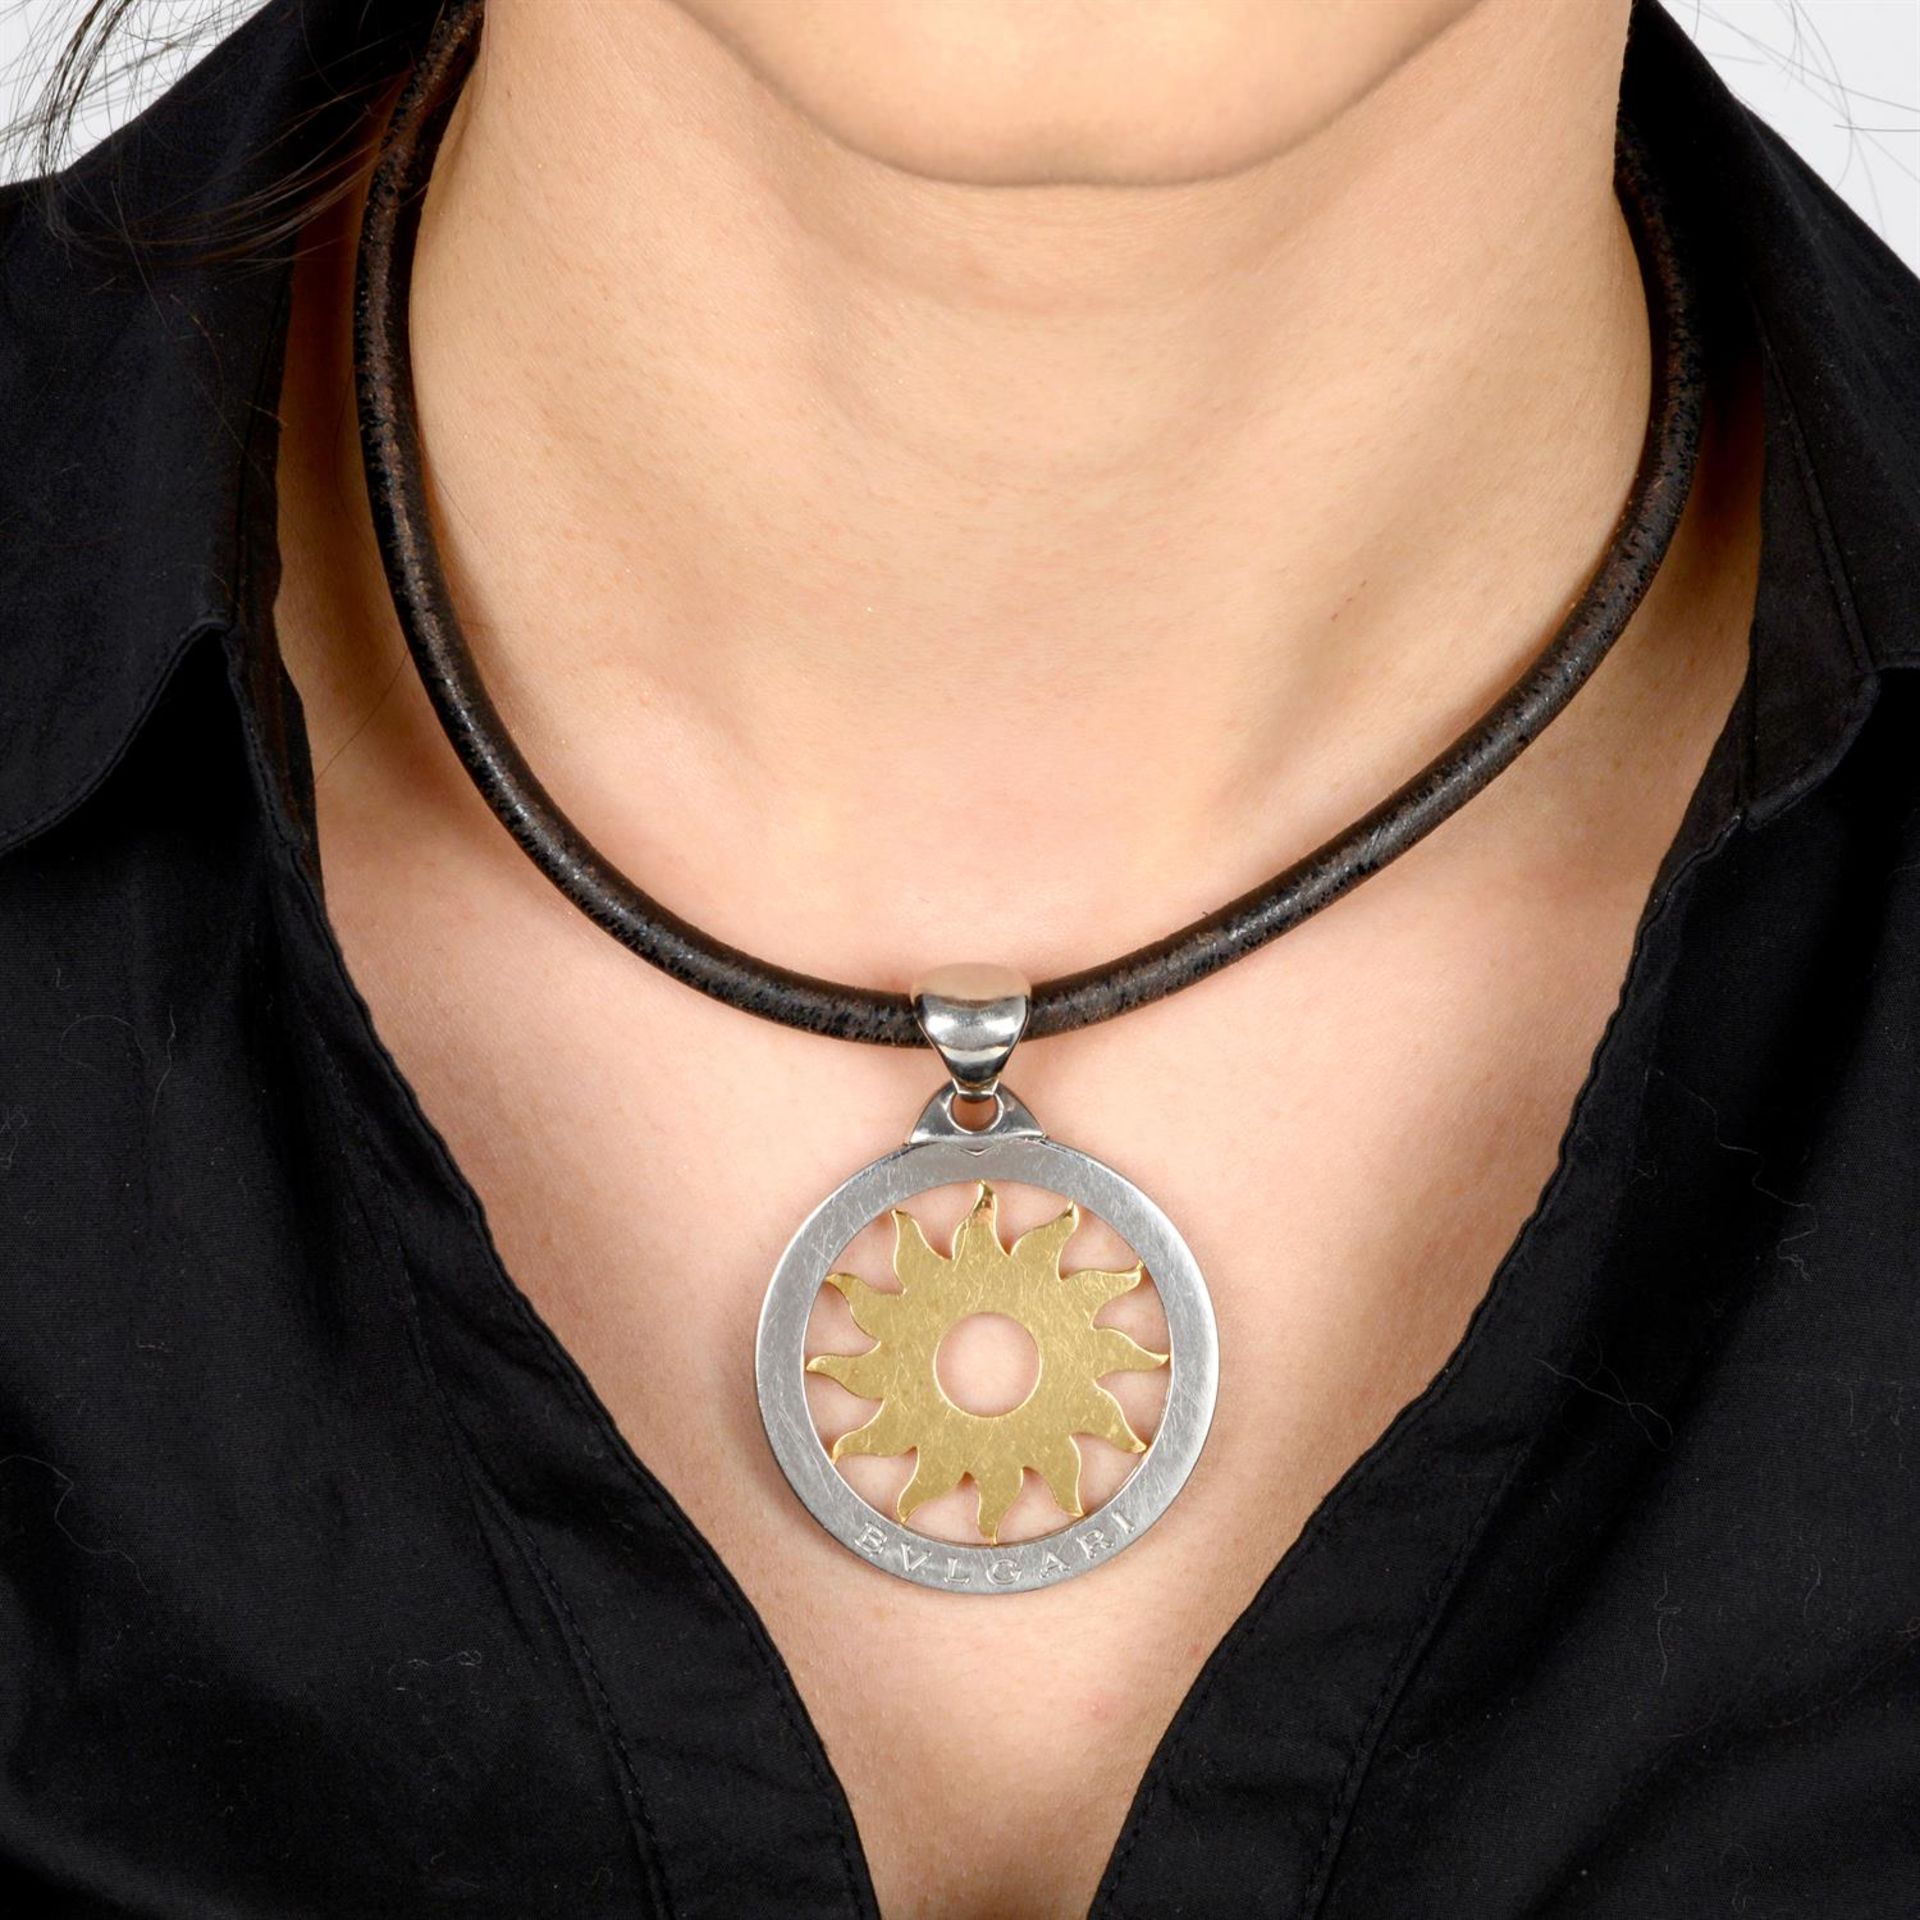 'Tondo' pendant, with collar, by Bulgari